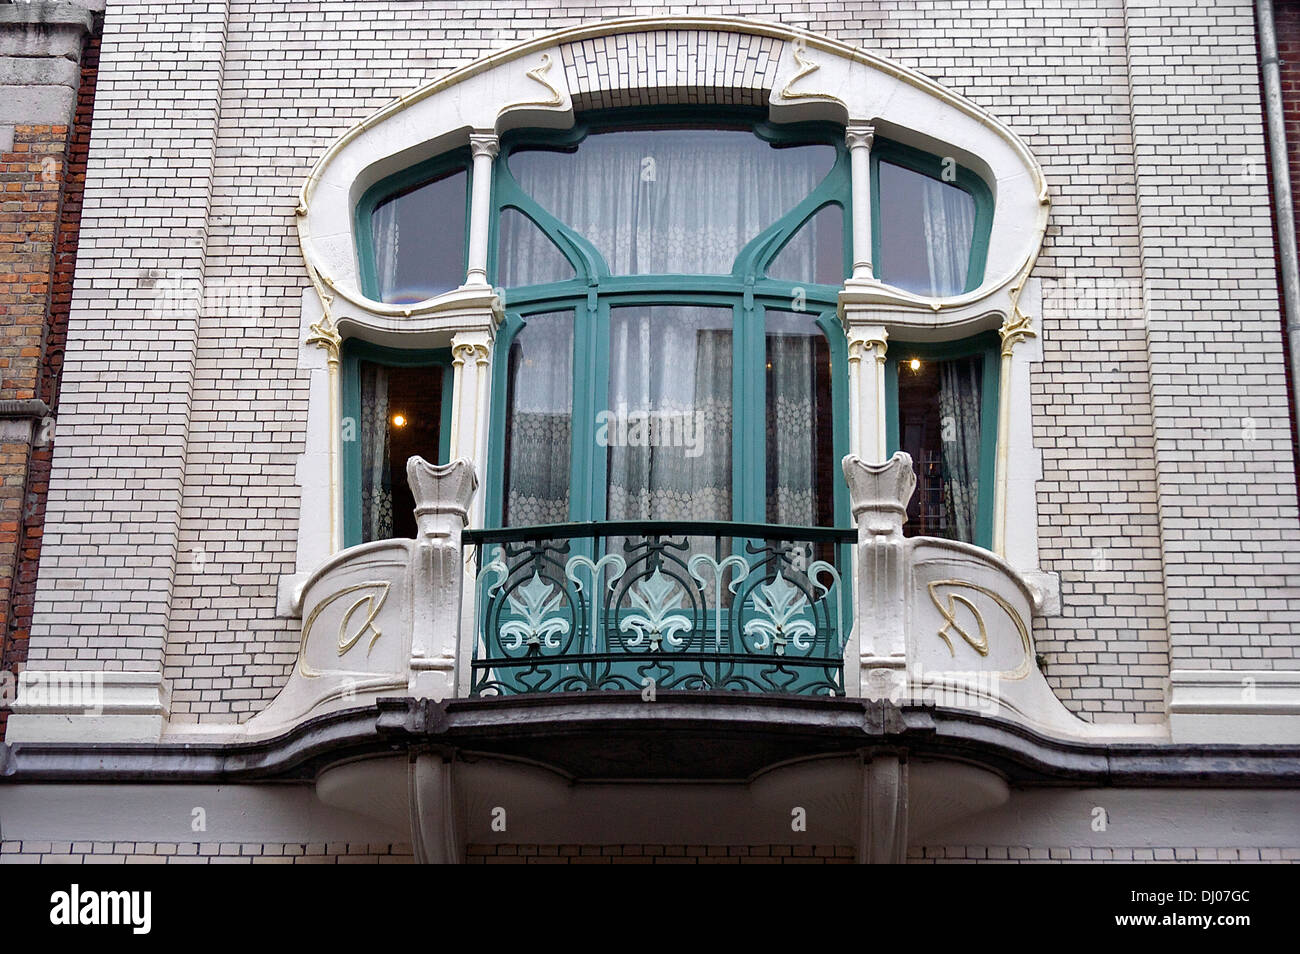 Europe, Belgium, Antwerp. An ornate window in a home in Antwerp's historic Zurenborg neighborhood Stock Photo